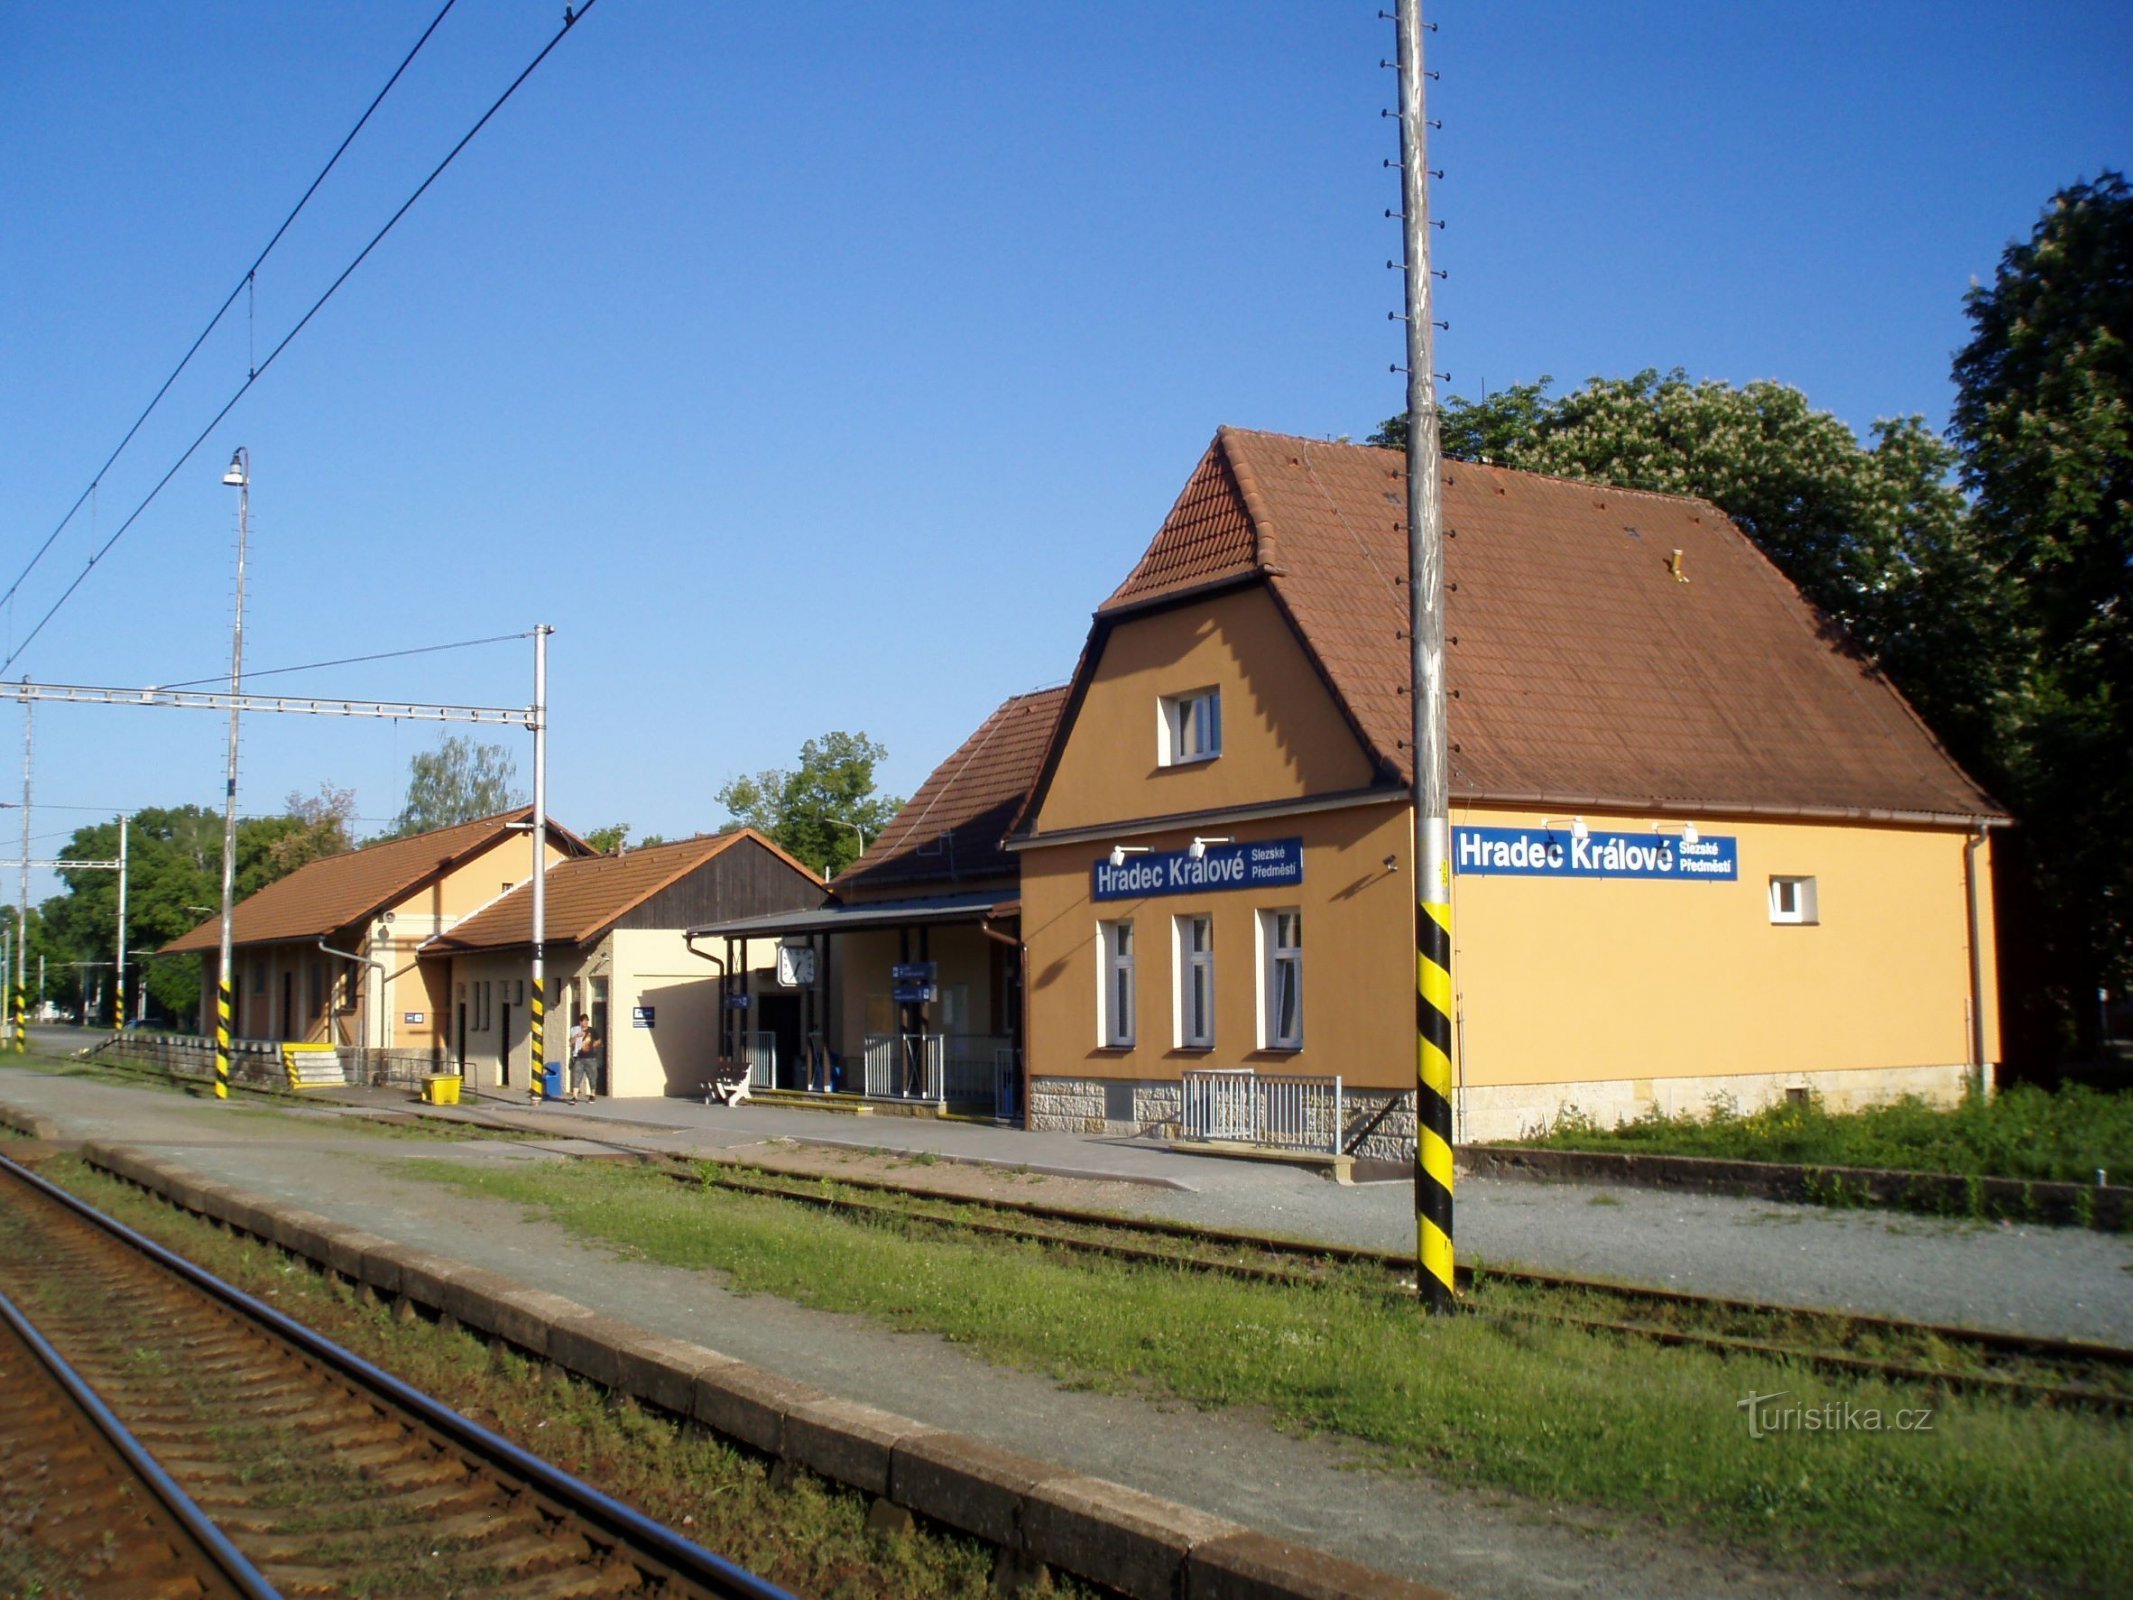 Estación de tren en los suburbios de Silesia (Hradec Králové, 19.5.2012)